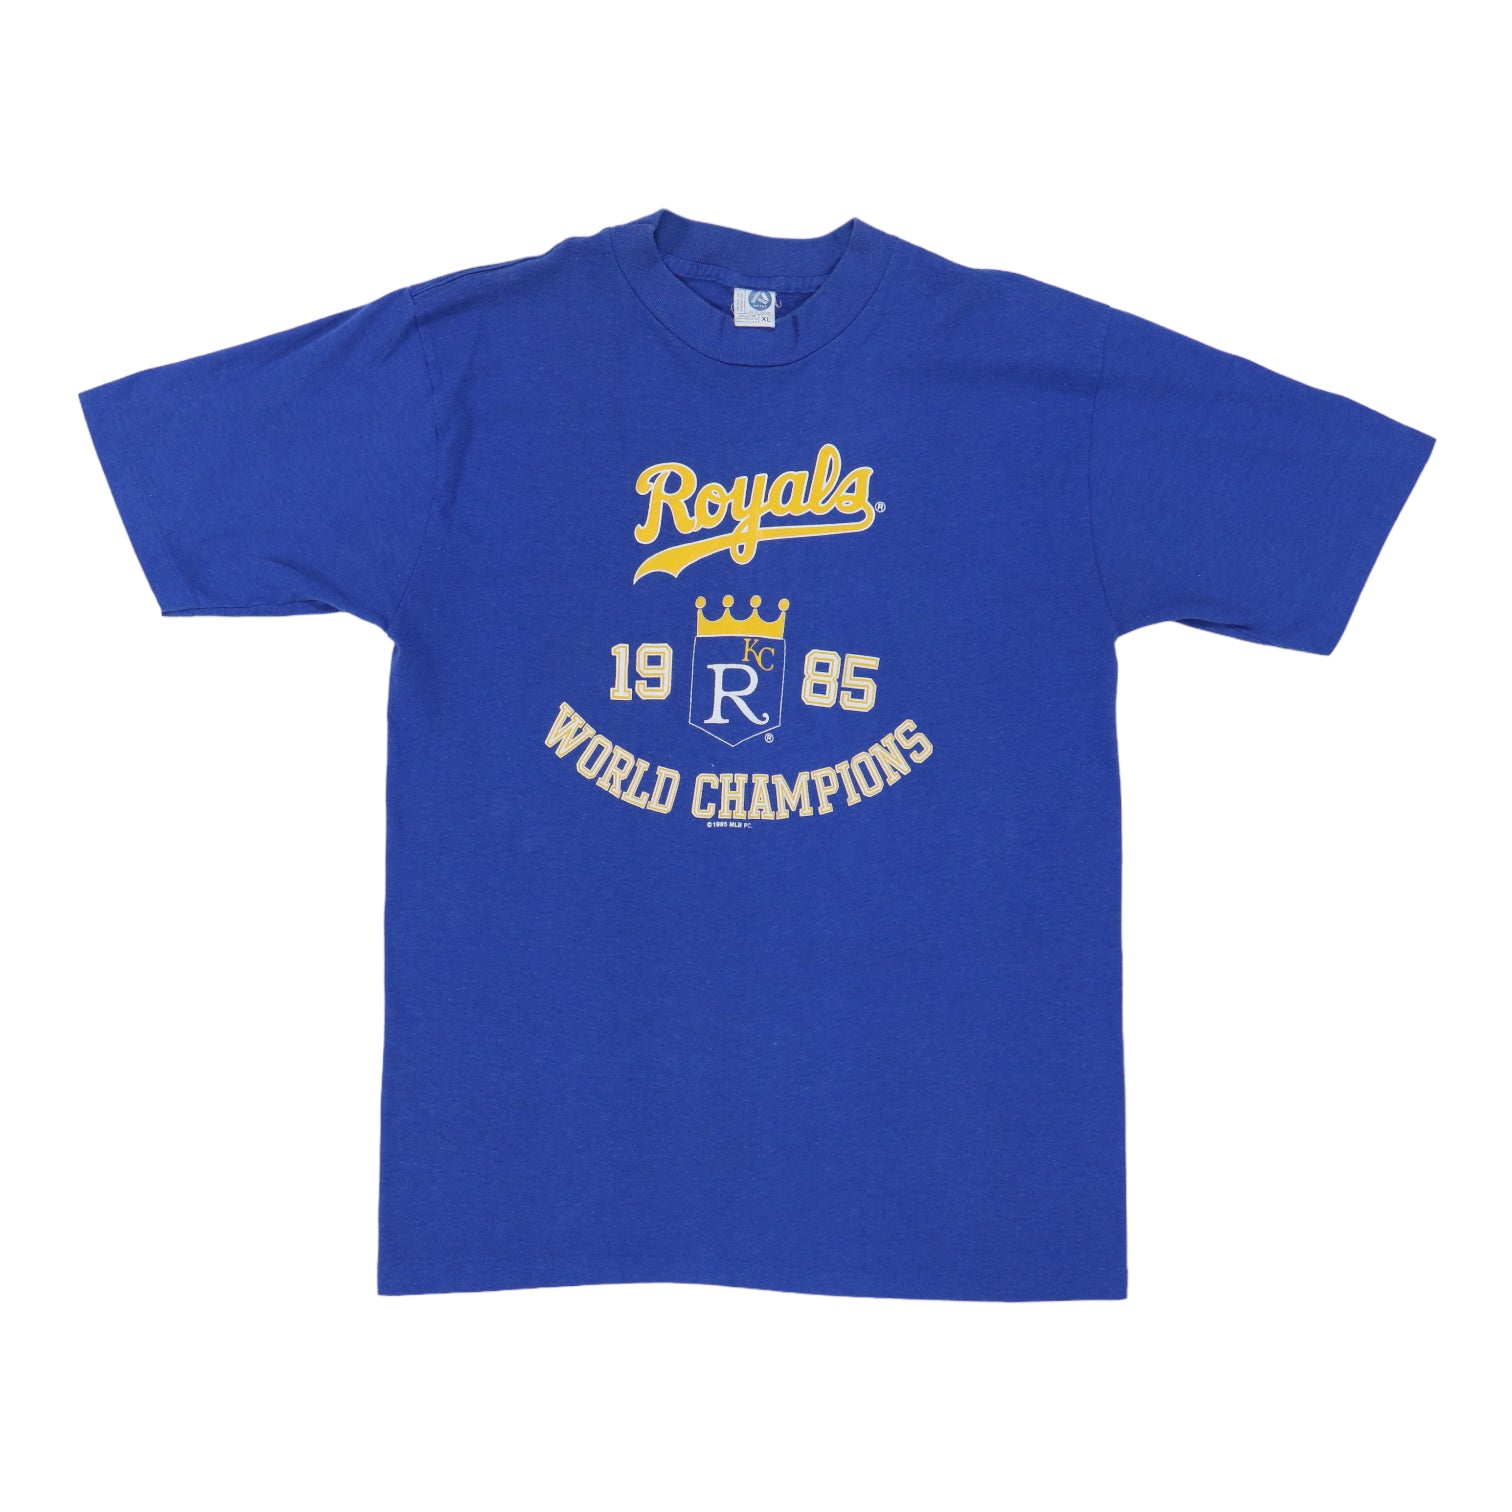 Kansas City Royals Vs St Louis Cardinals 1985 Interstate World Series Shirt  - High-Quality Printed Brand